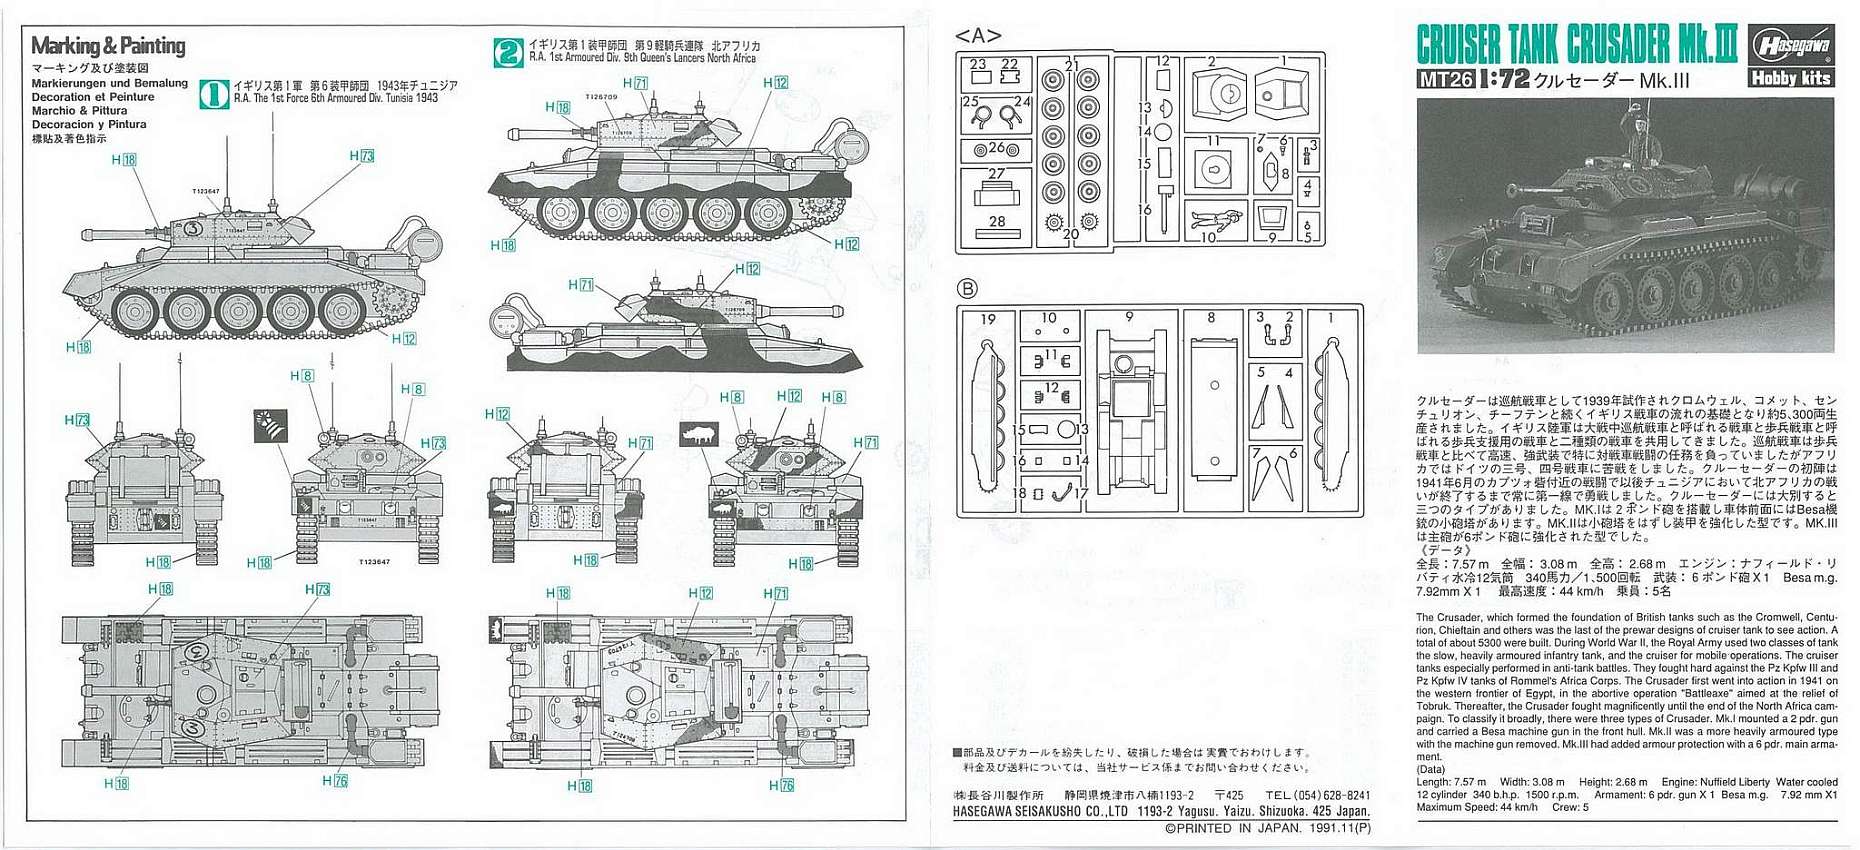 Hasegawa 31126  CRUSADER Mk III